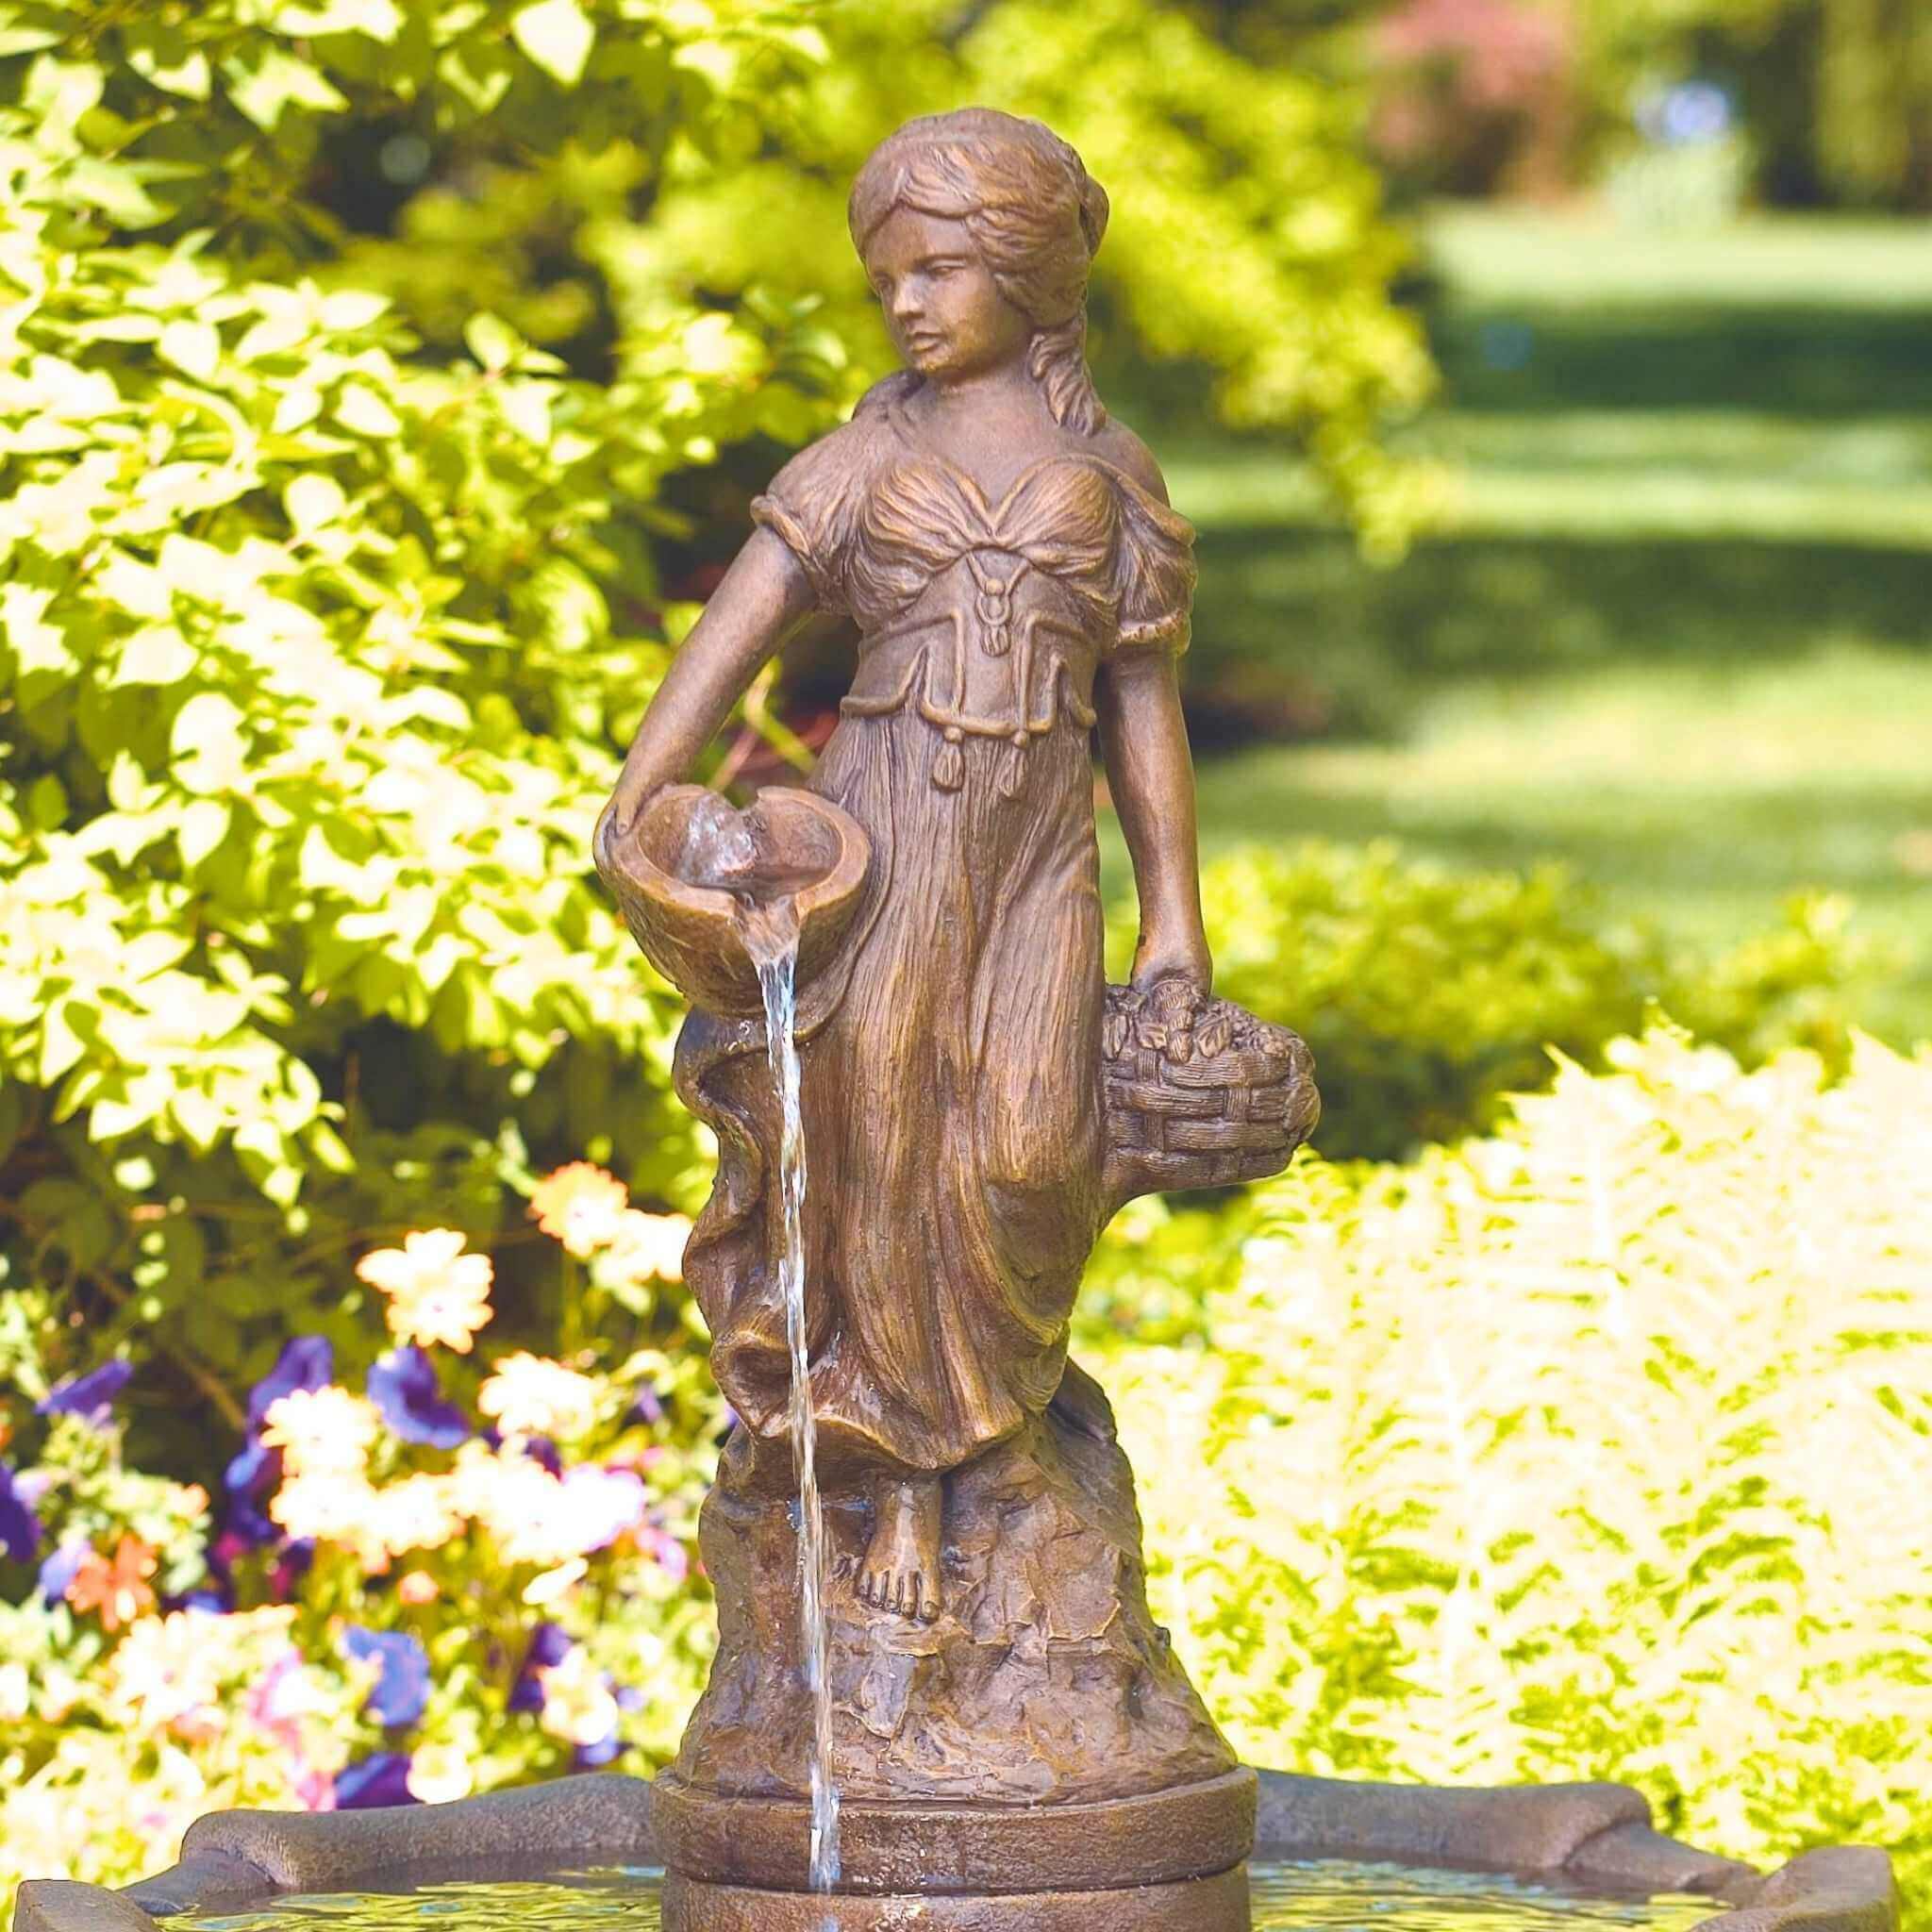 Lady of the Arbor 2-Tier Concrete Fountain - Massarellis #3620